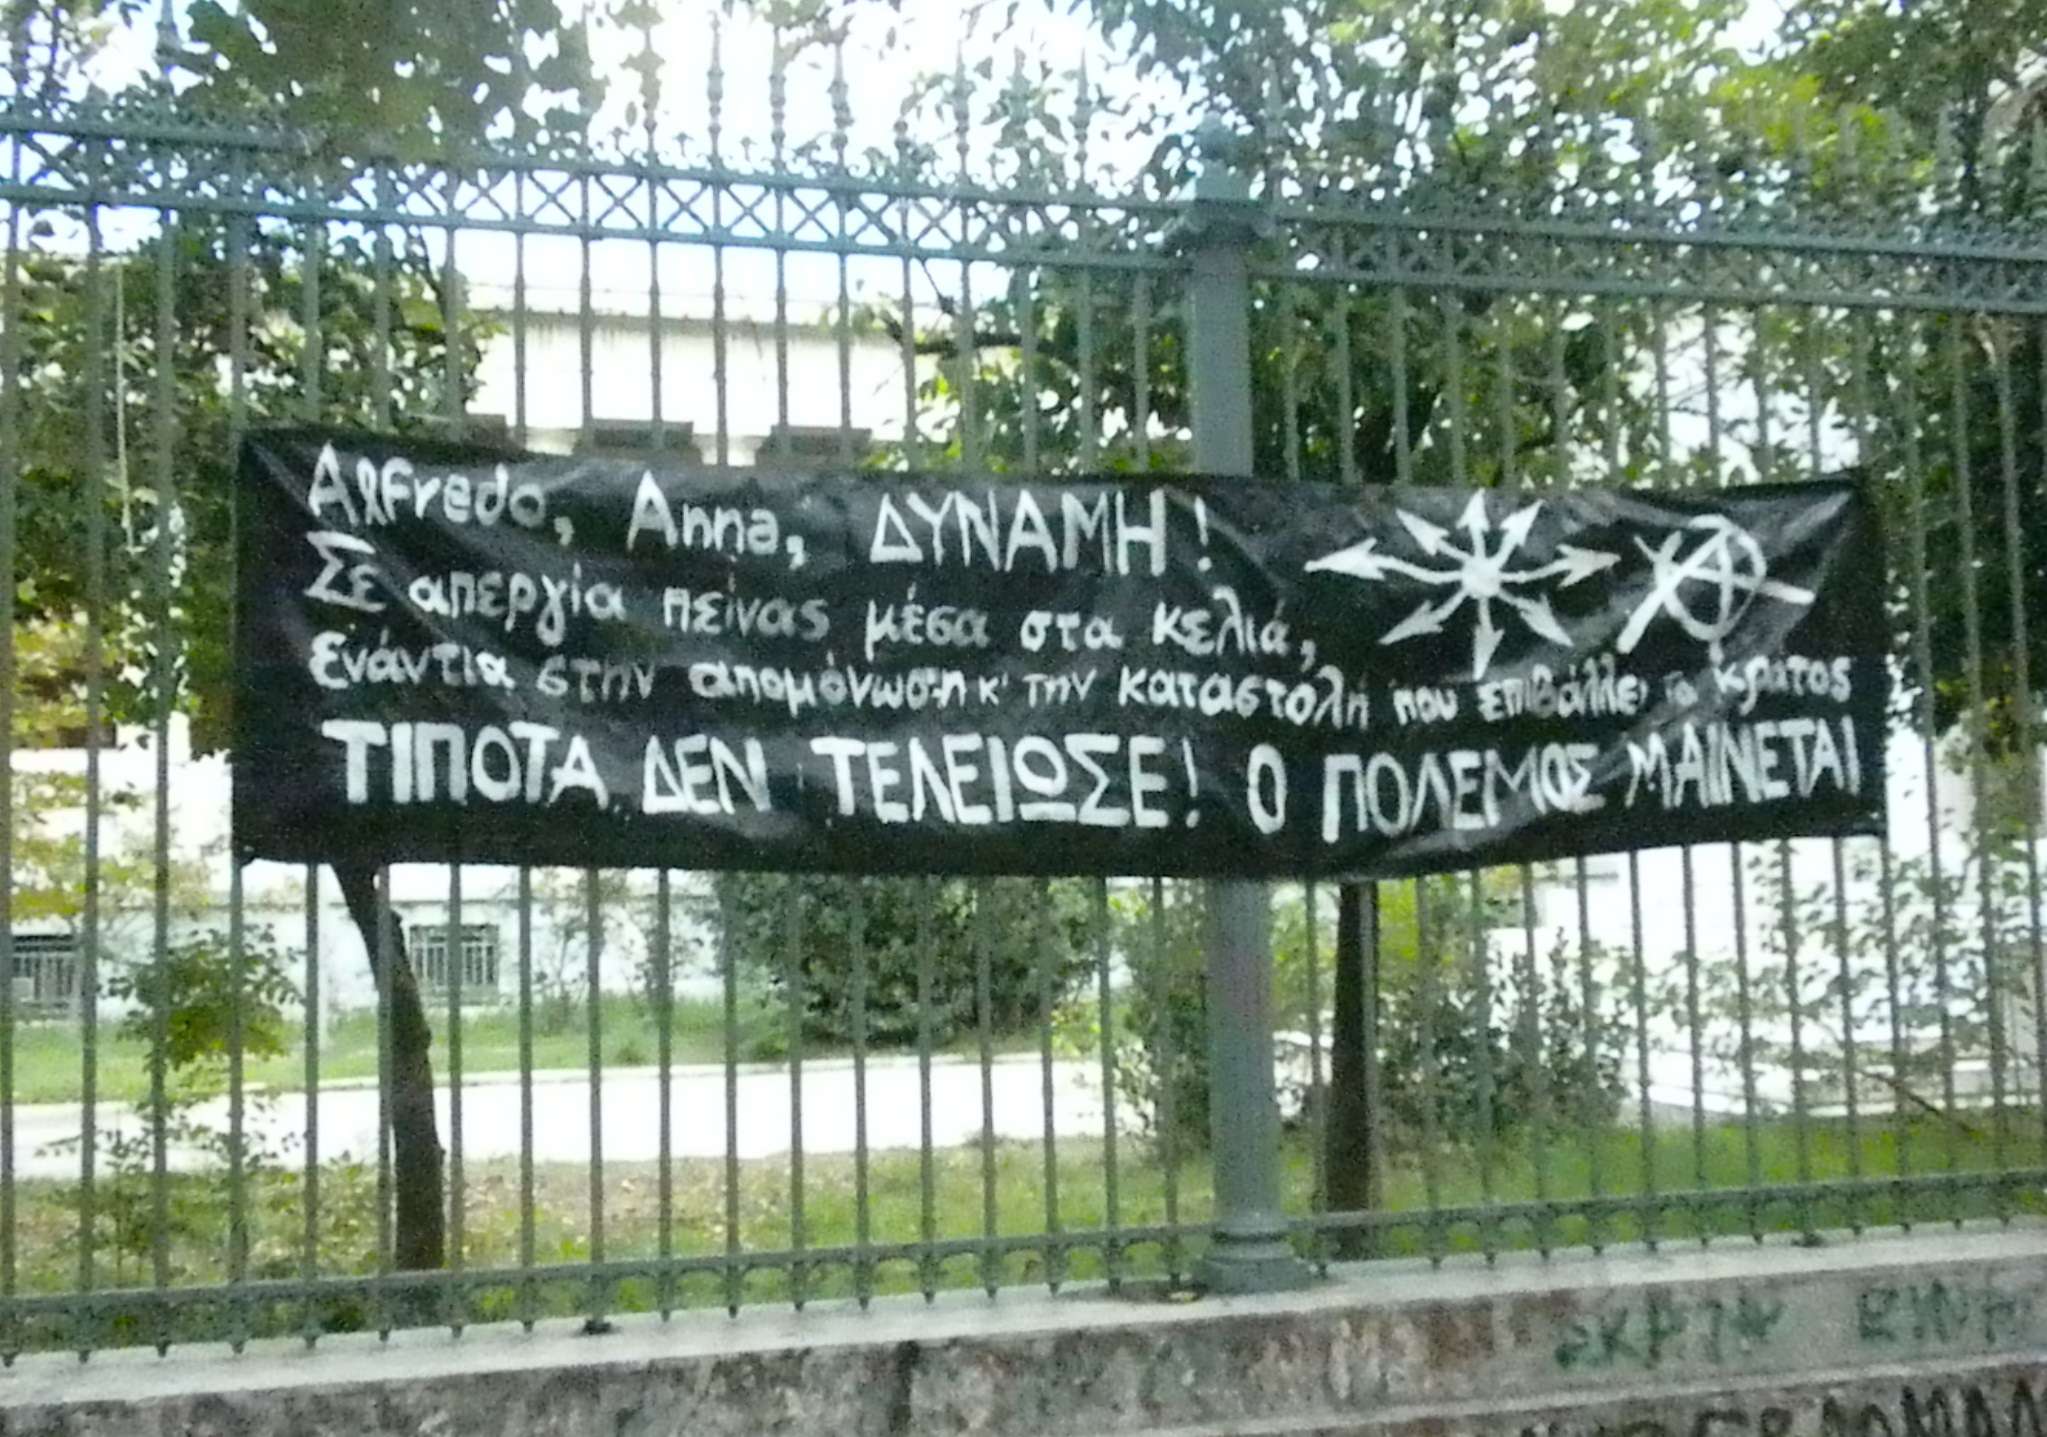 Uroborus: Για την απεργία πείνας του Alfredo Cospito και της Anna Beniamino στις ιταλικές φυλακές